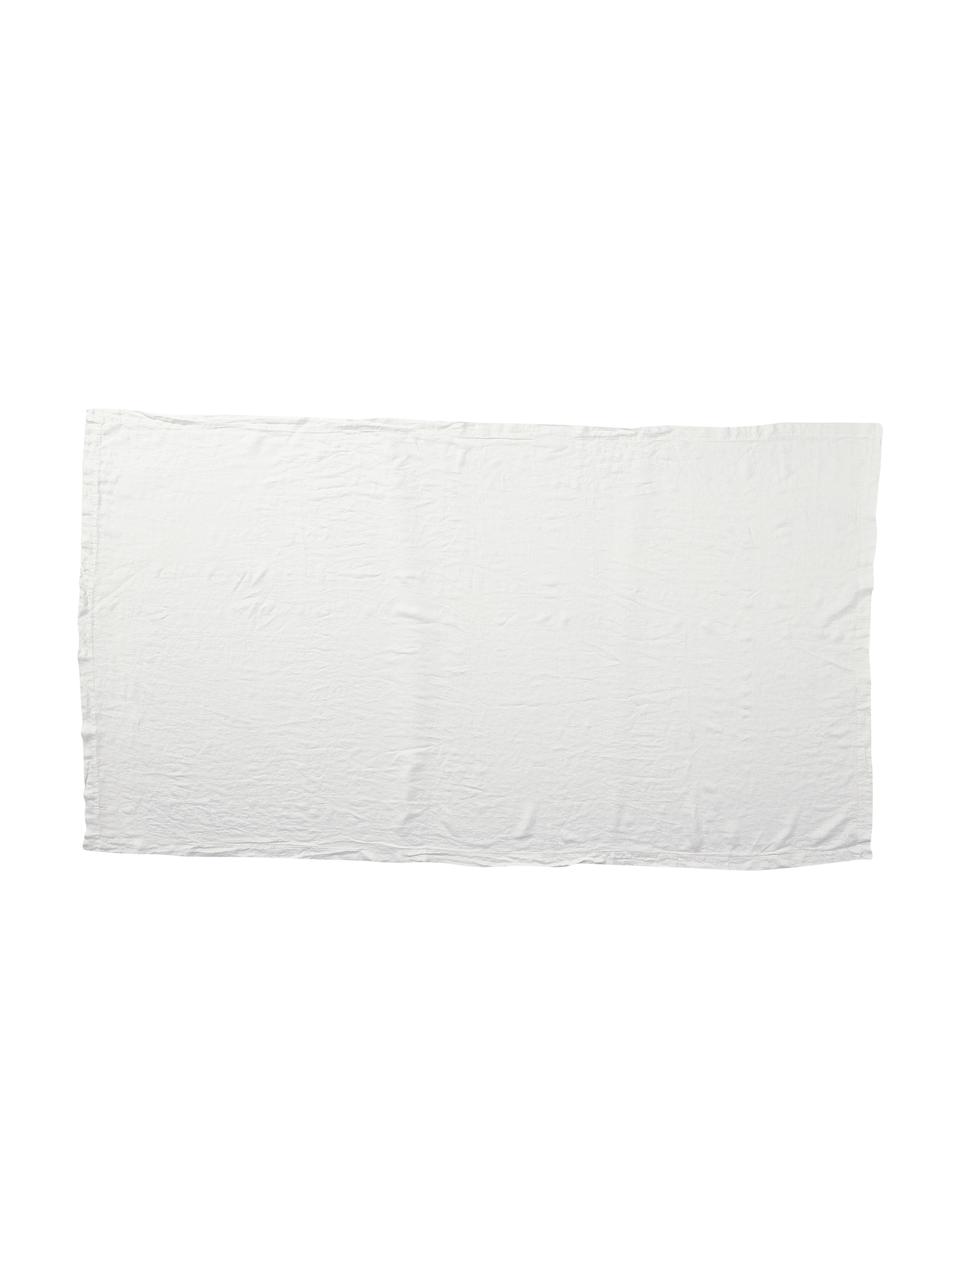 Linnen tafelkleed Duk in wit, 100% linnen, Wit, Voor 6 - 10 personen (B 135 x L 250 cm)